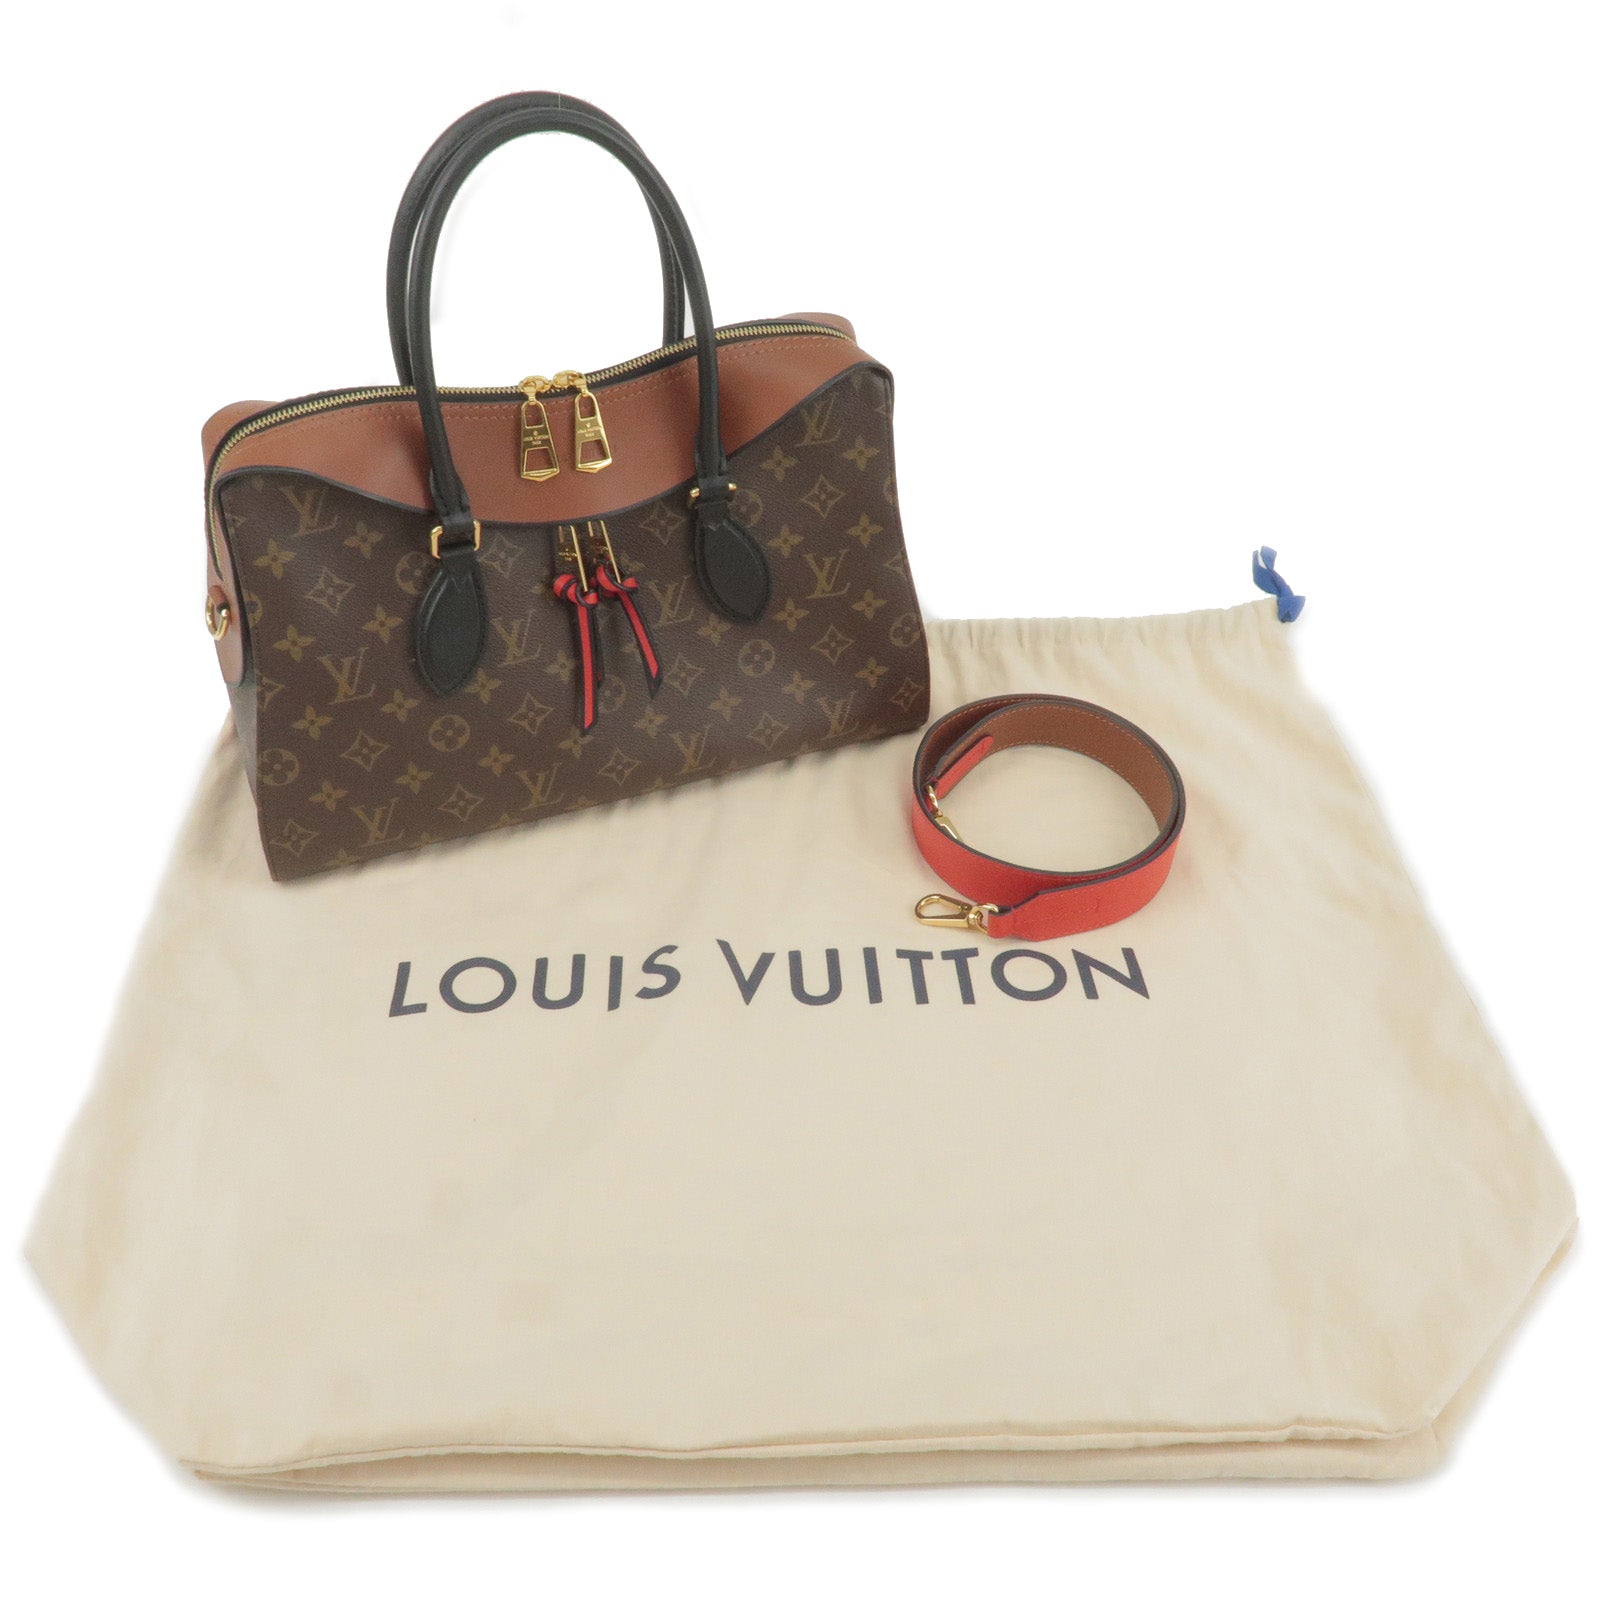 Louis Vuitton Tuileries Monogram Canvas Tote Shoulder Bag